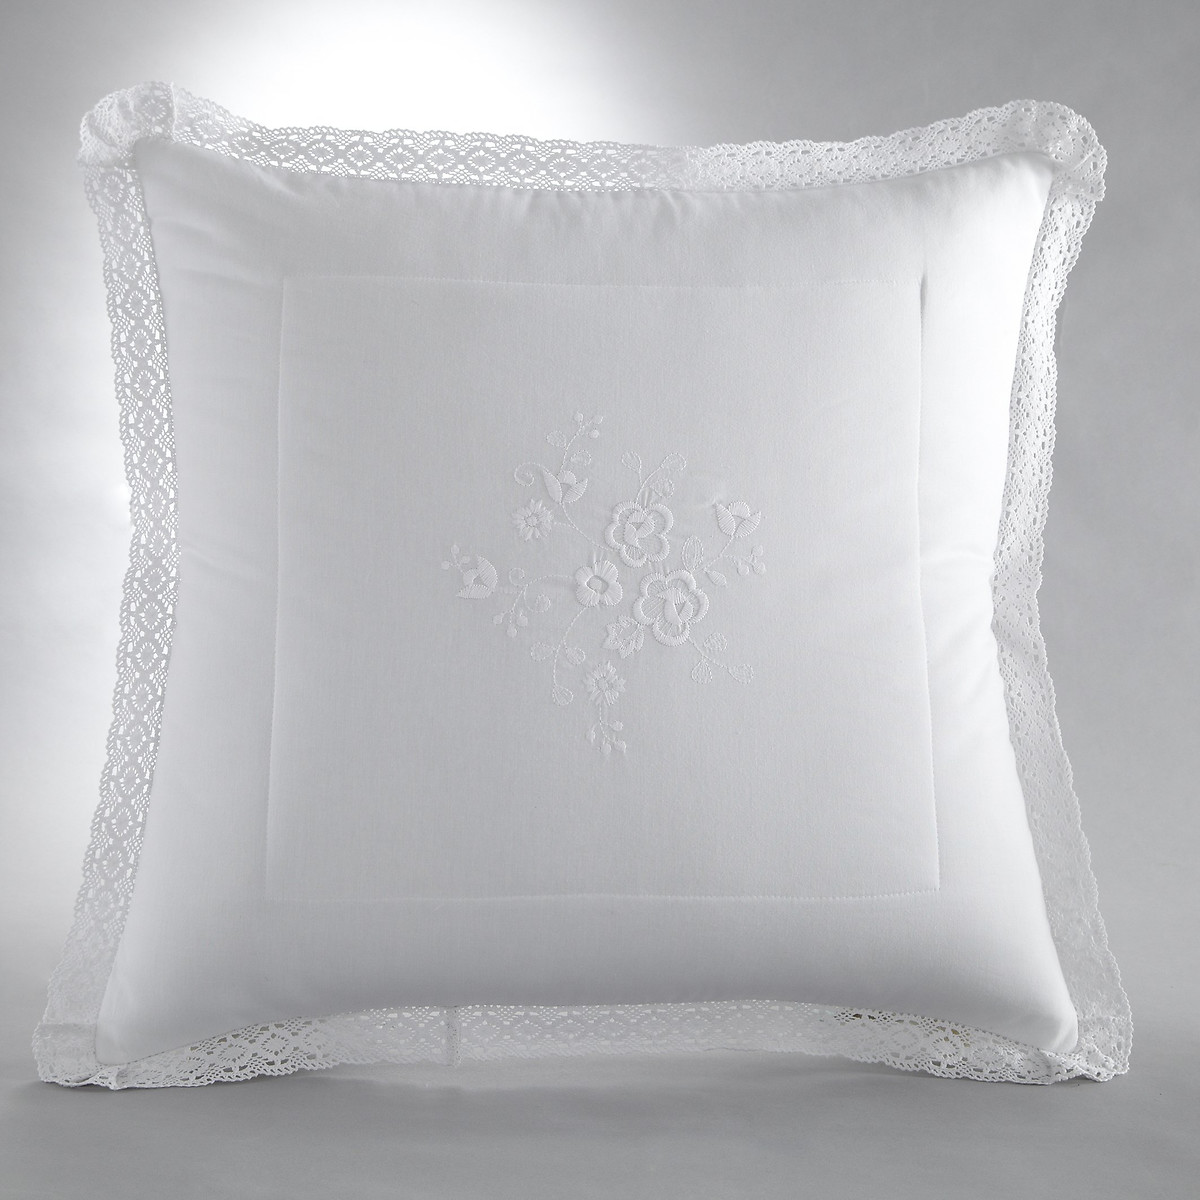 Чехол La Redoute На подушку-валик или на подушку OYENA 40 x 40 см белый, размер 40 x 40 см - фото 2